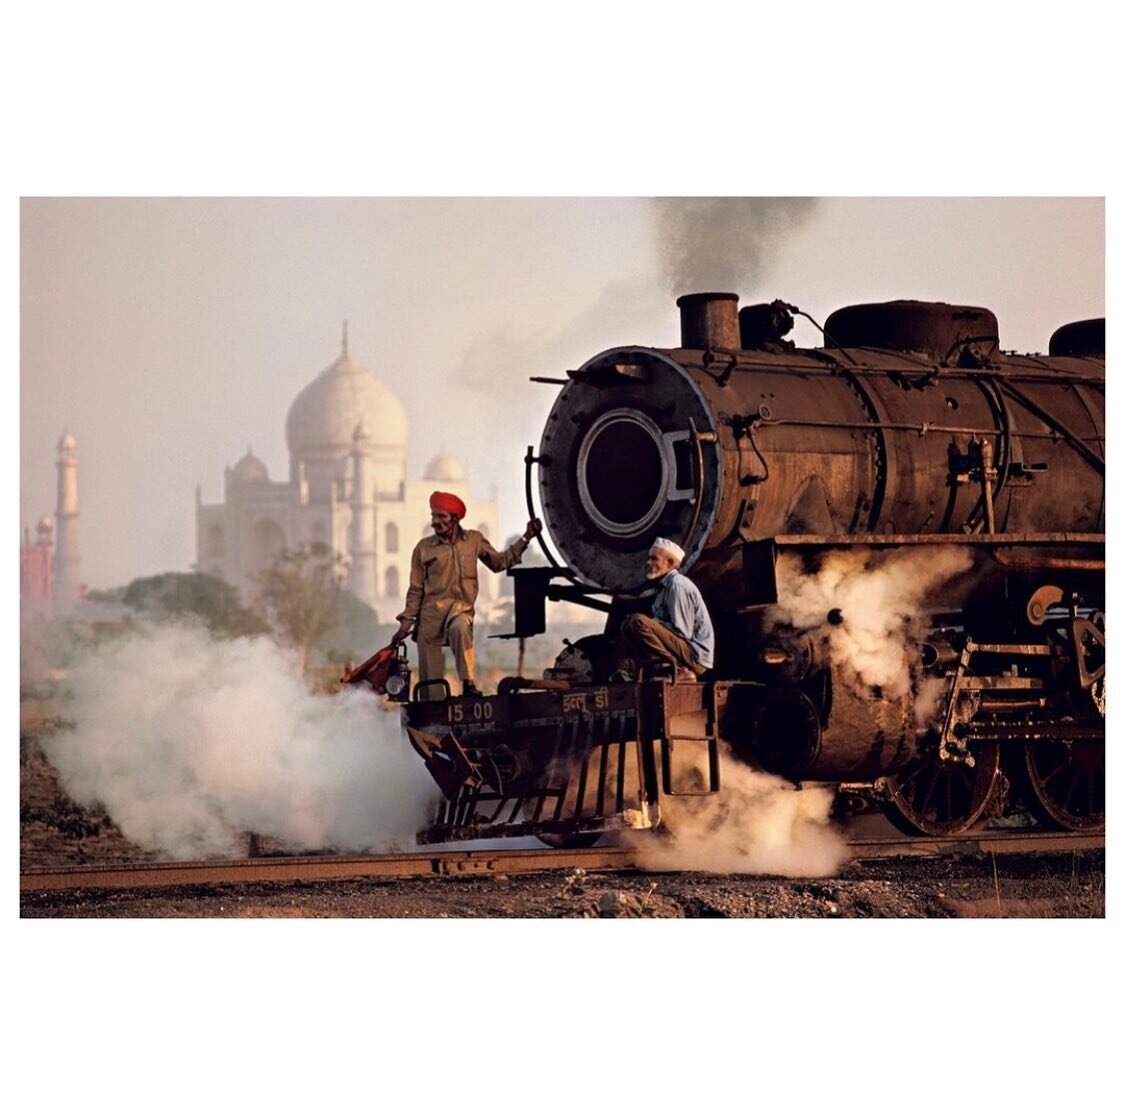 -
PHOTO: Taj and train. Agra, India. 1983. 
 
&copy; @stevemccurryofficial/#MagnumPhotos
.
.
#stevemccurry #documentary #photography #photojournalism #magnum #magnumphotos #magnumphotosphotographers #magnumphotoskoreaagent #europhotos #스티브맥커리 #다큐멘터리 